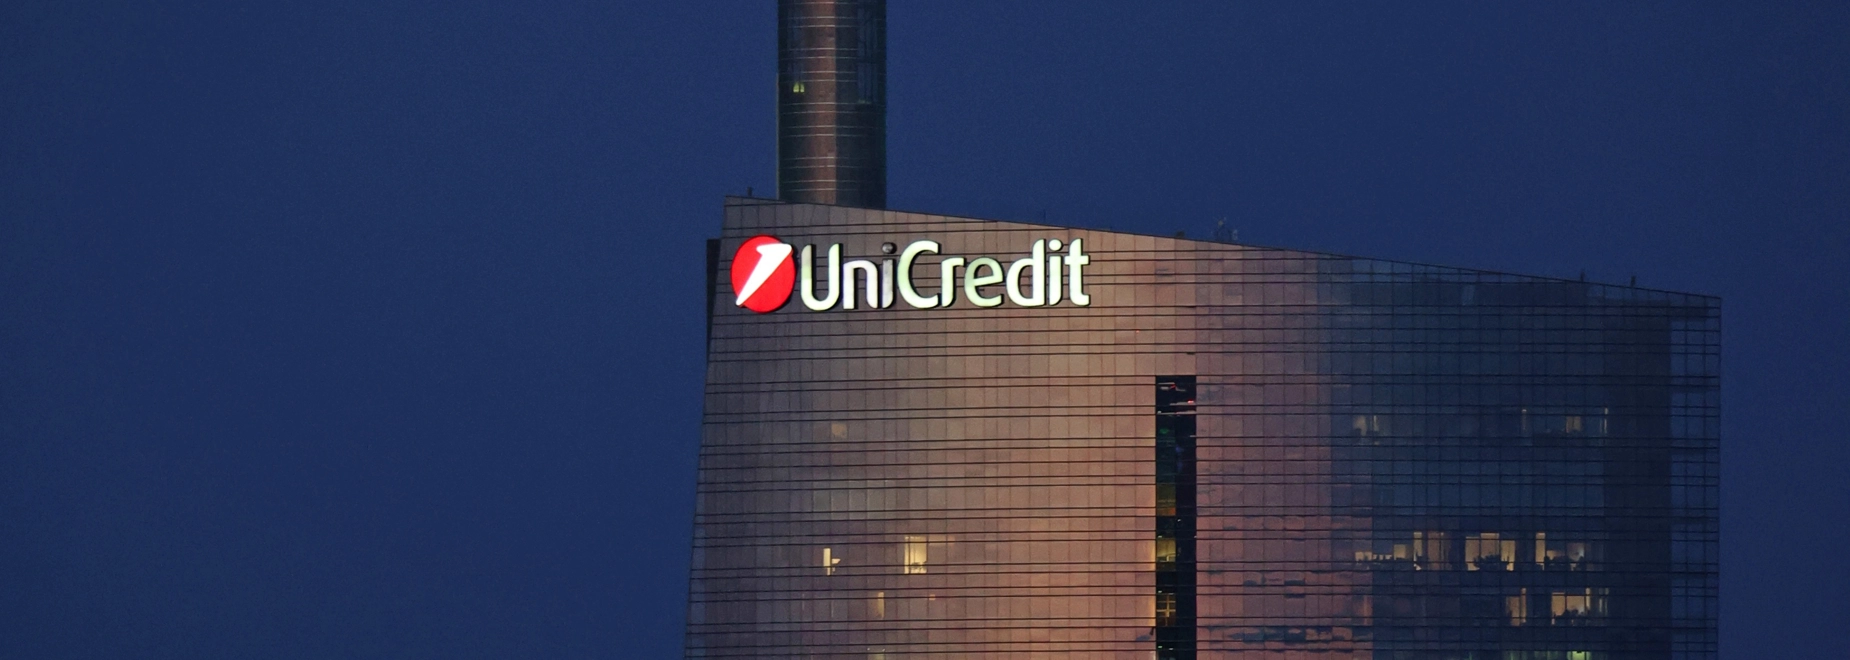 UniCredit Tower at night